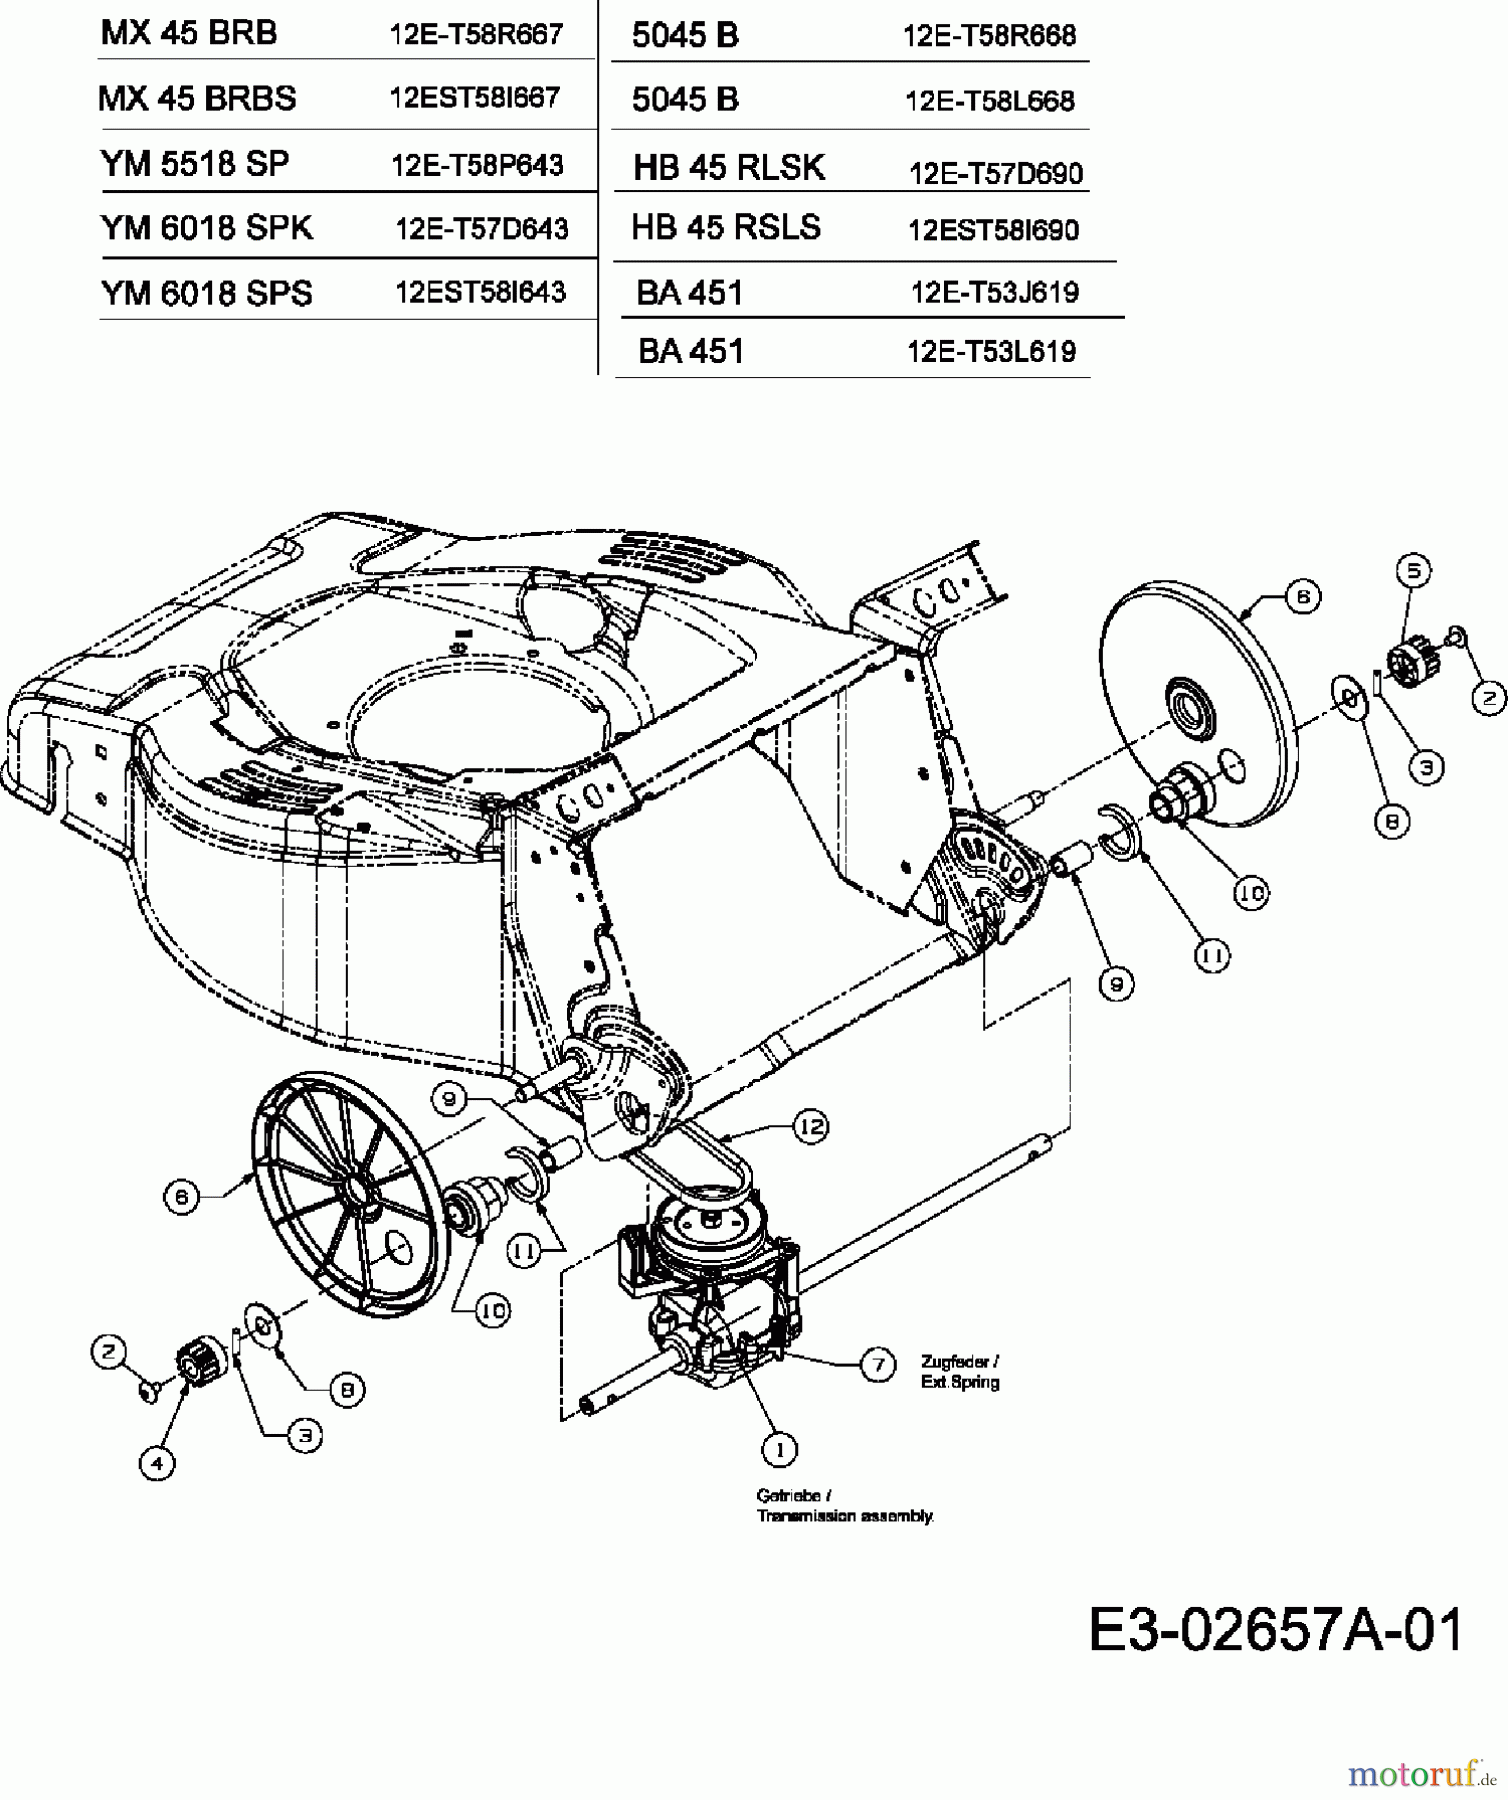  Gutbrod Petrol mower self propelled HB 45 RSLS 12EST58I690  (2006) Gearbox 618-04364